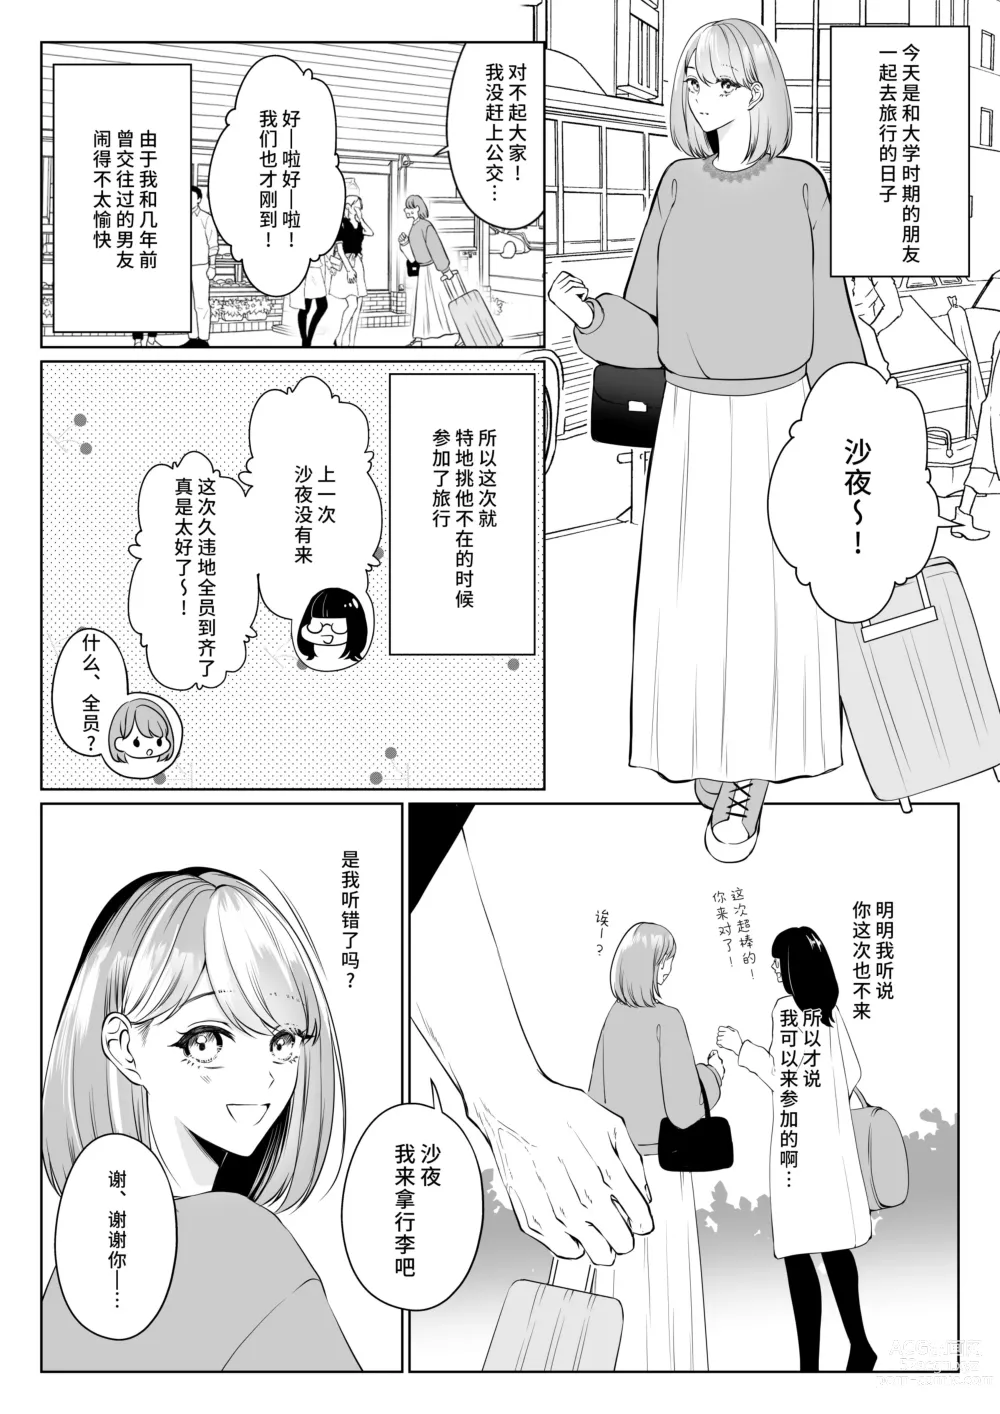 Page 5 of doujinshi 前任桐也沉重而又扭曲的爱